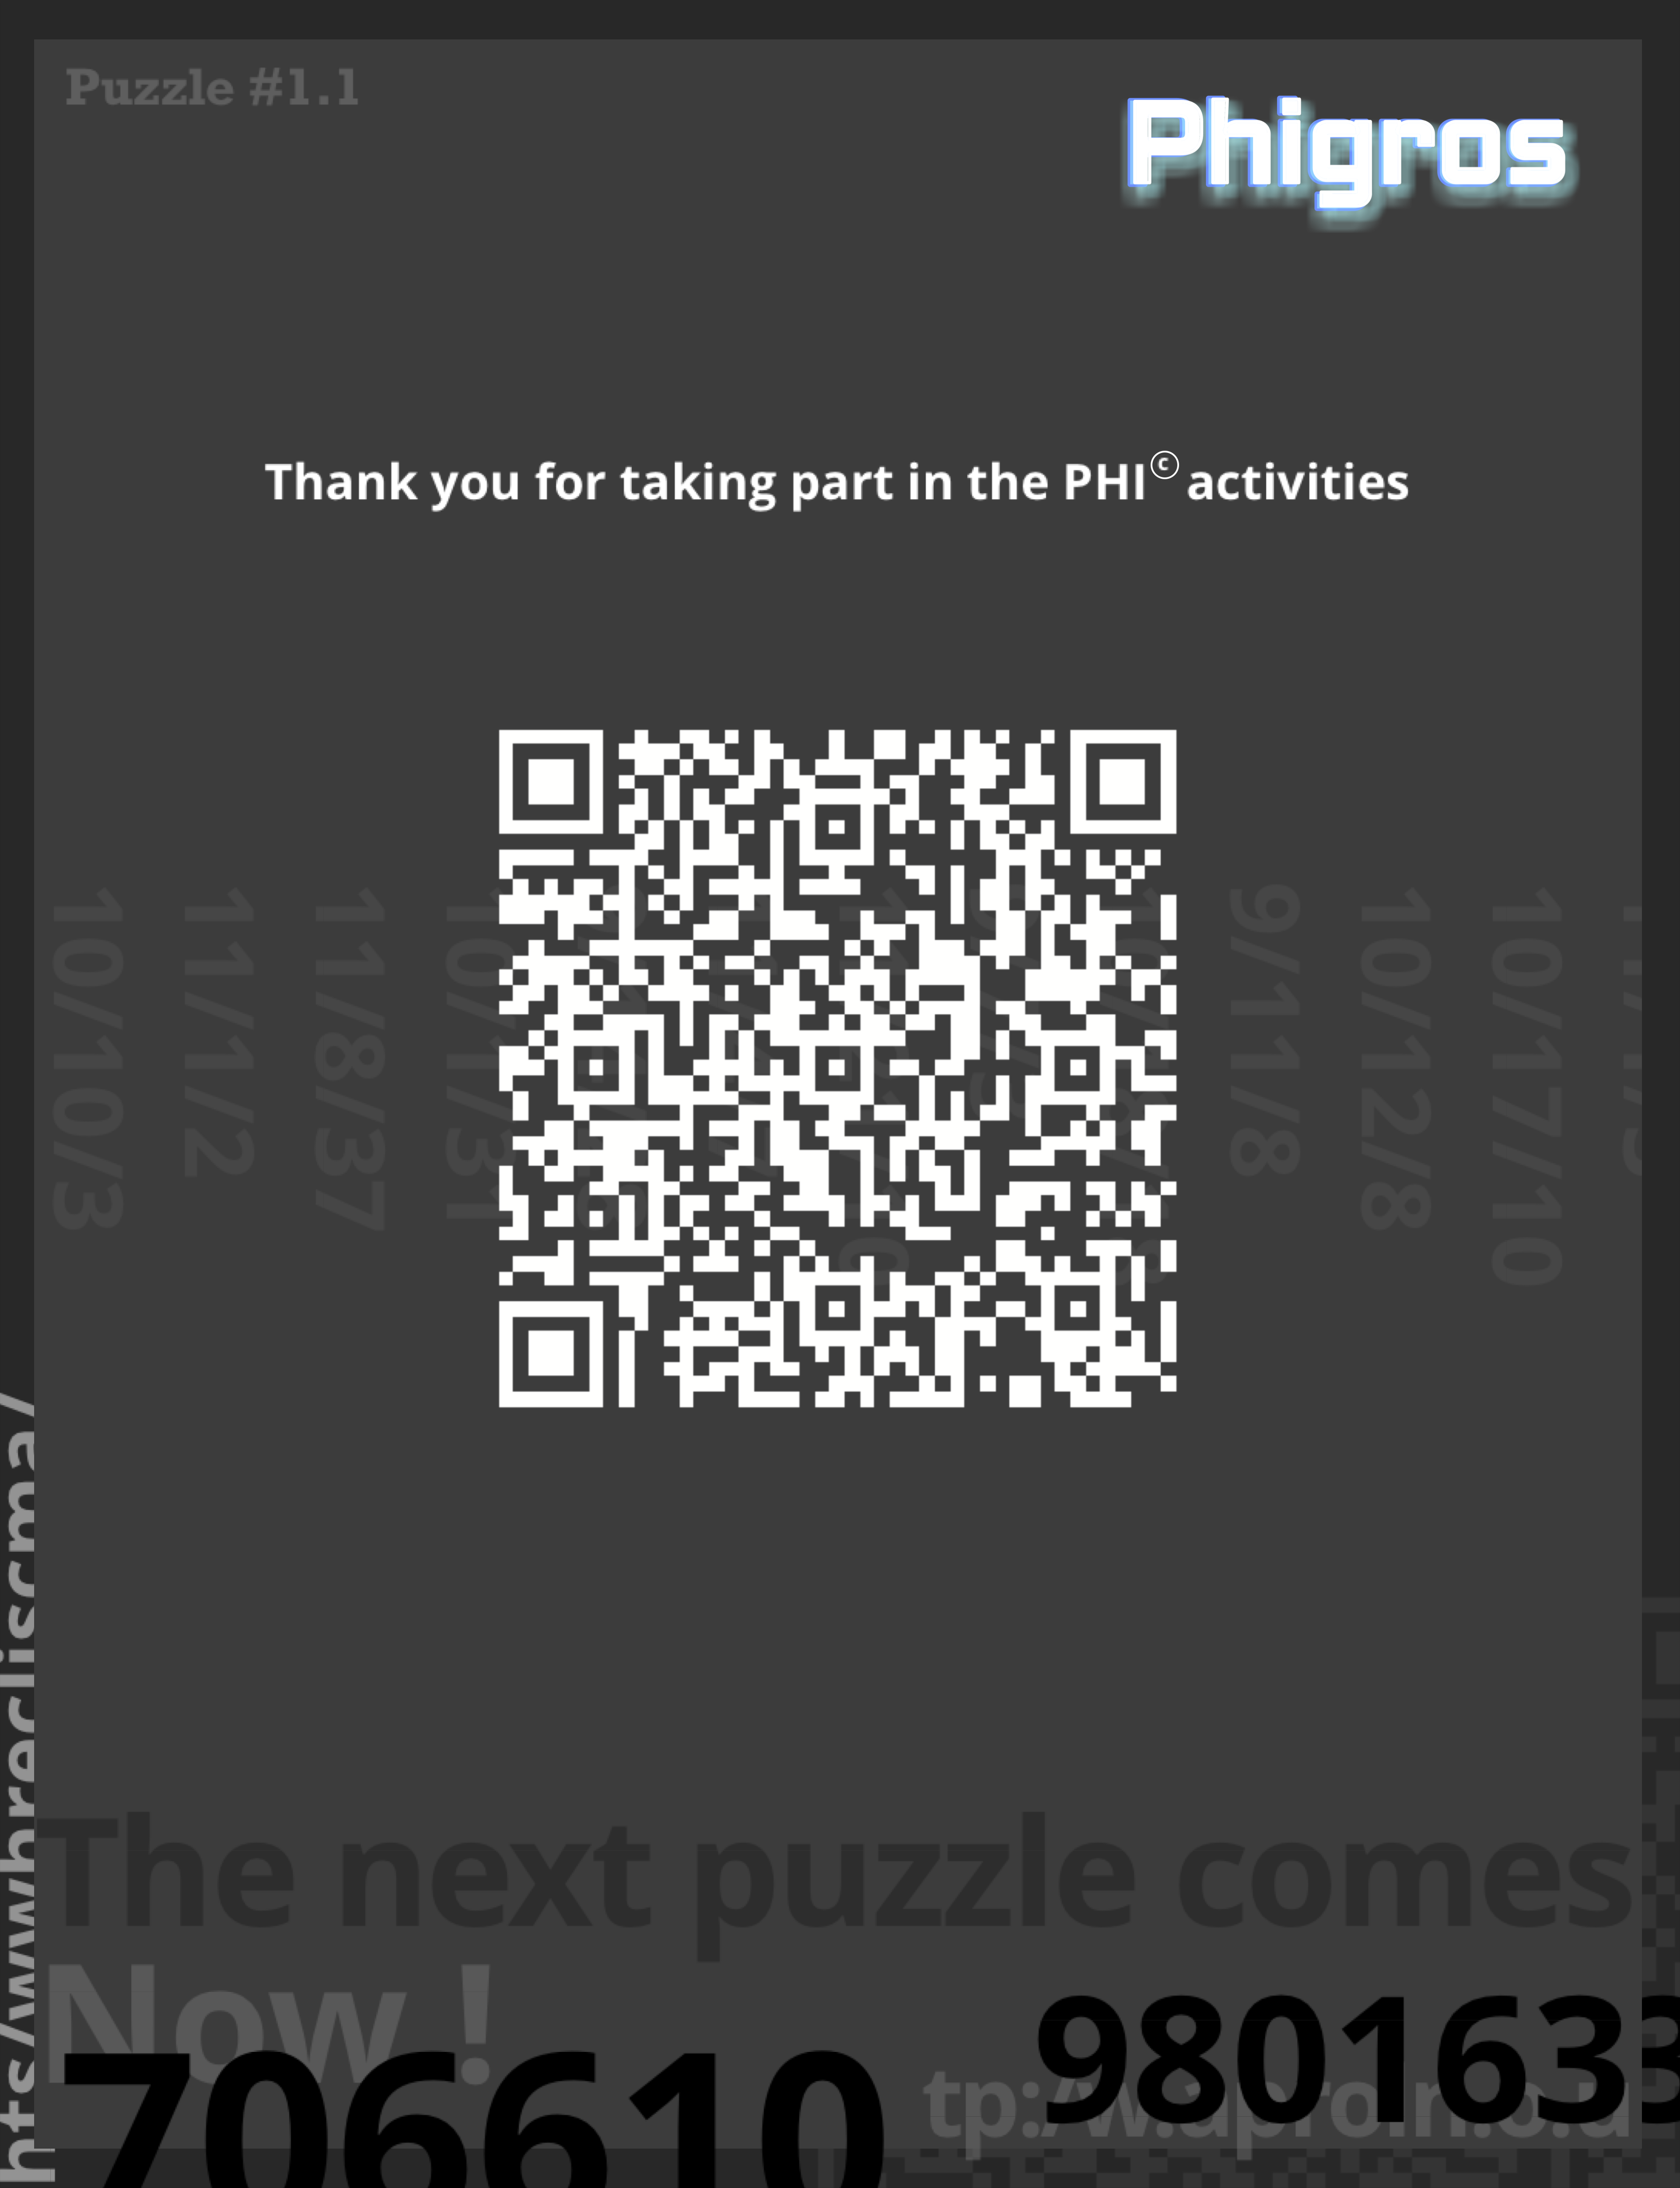 【Phigros】十七的寶藏 Puzzle #1.1謎題解密及補充